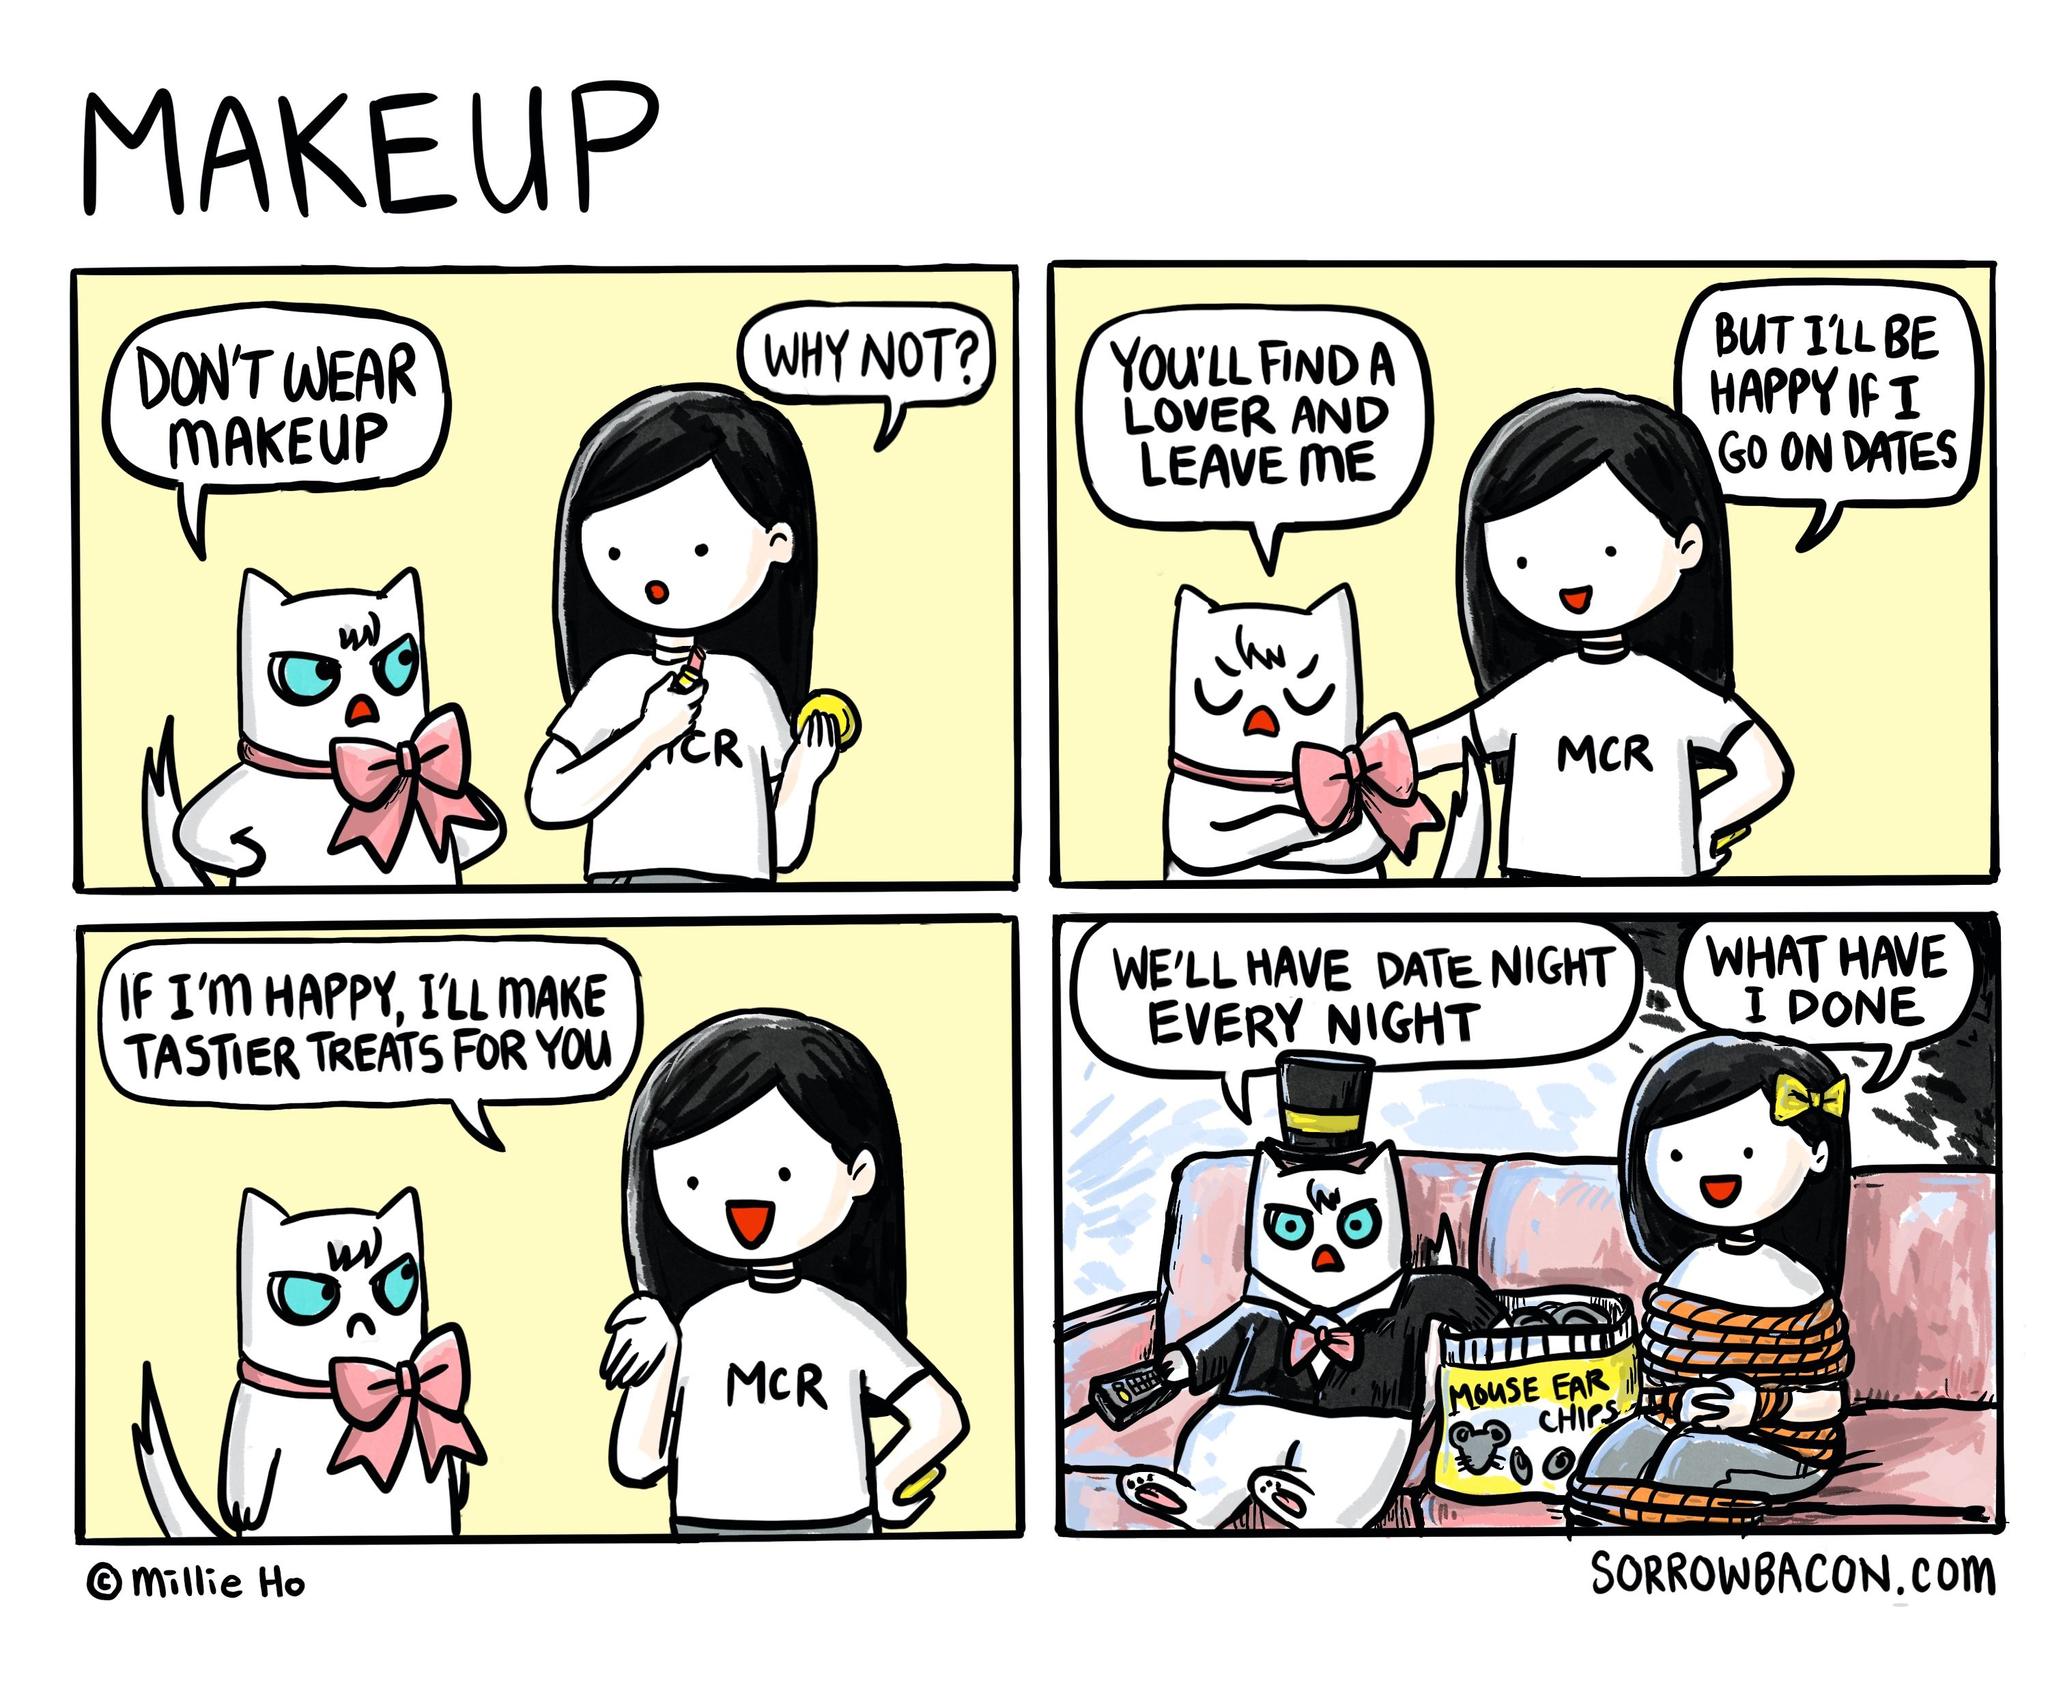 Makeup sorrowbacon comic